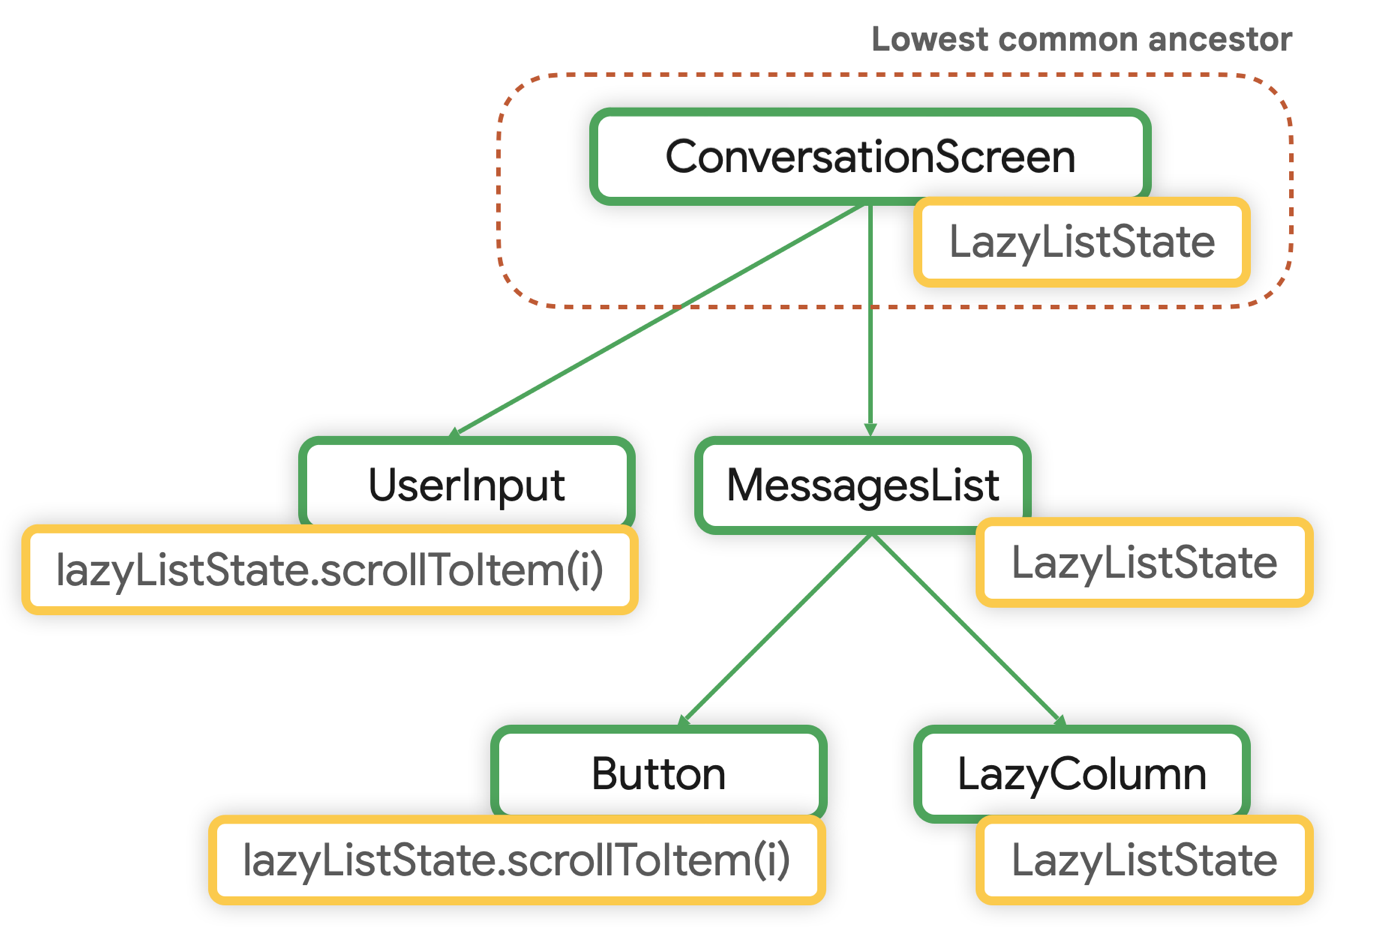 LazyListState 的最低共同祖先实体是 ConversationScreen